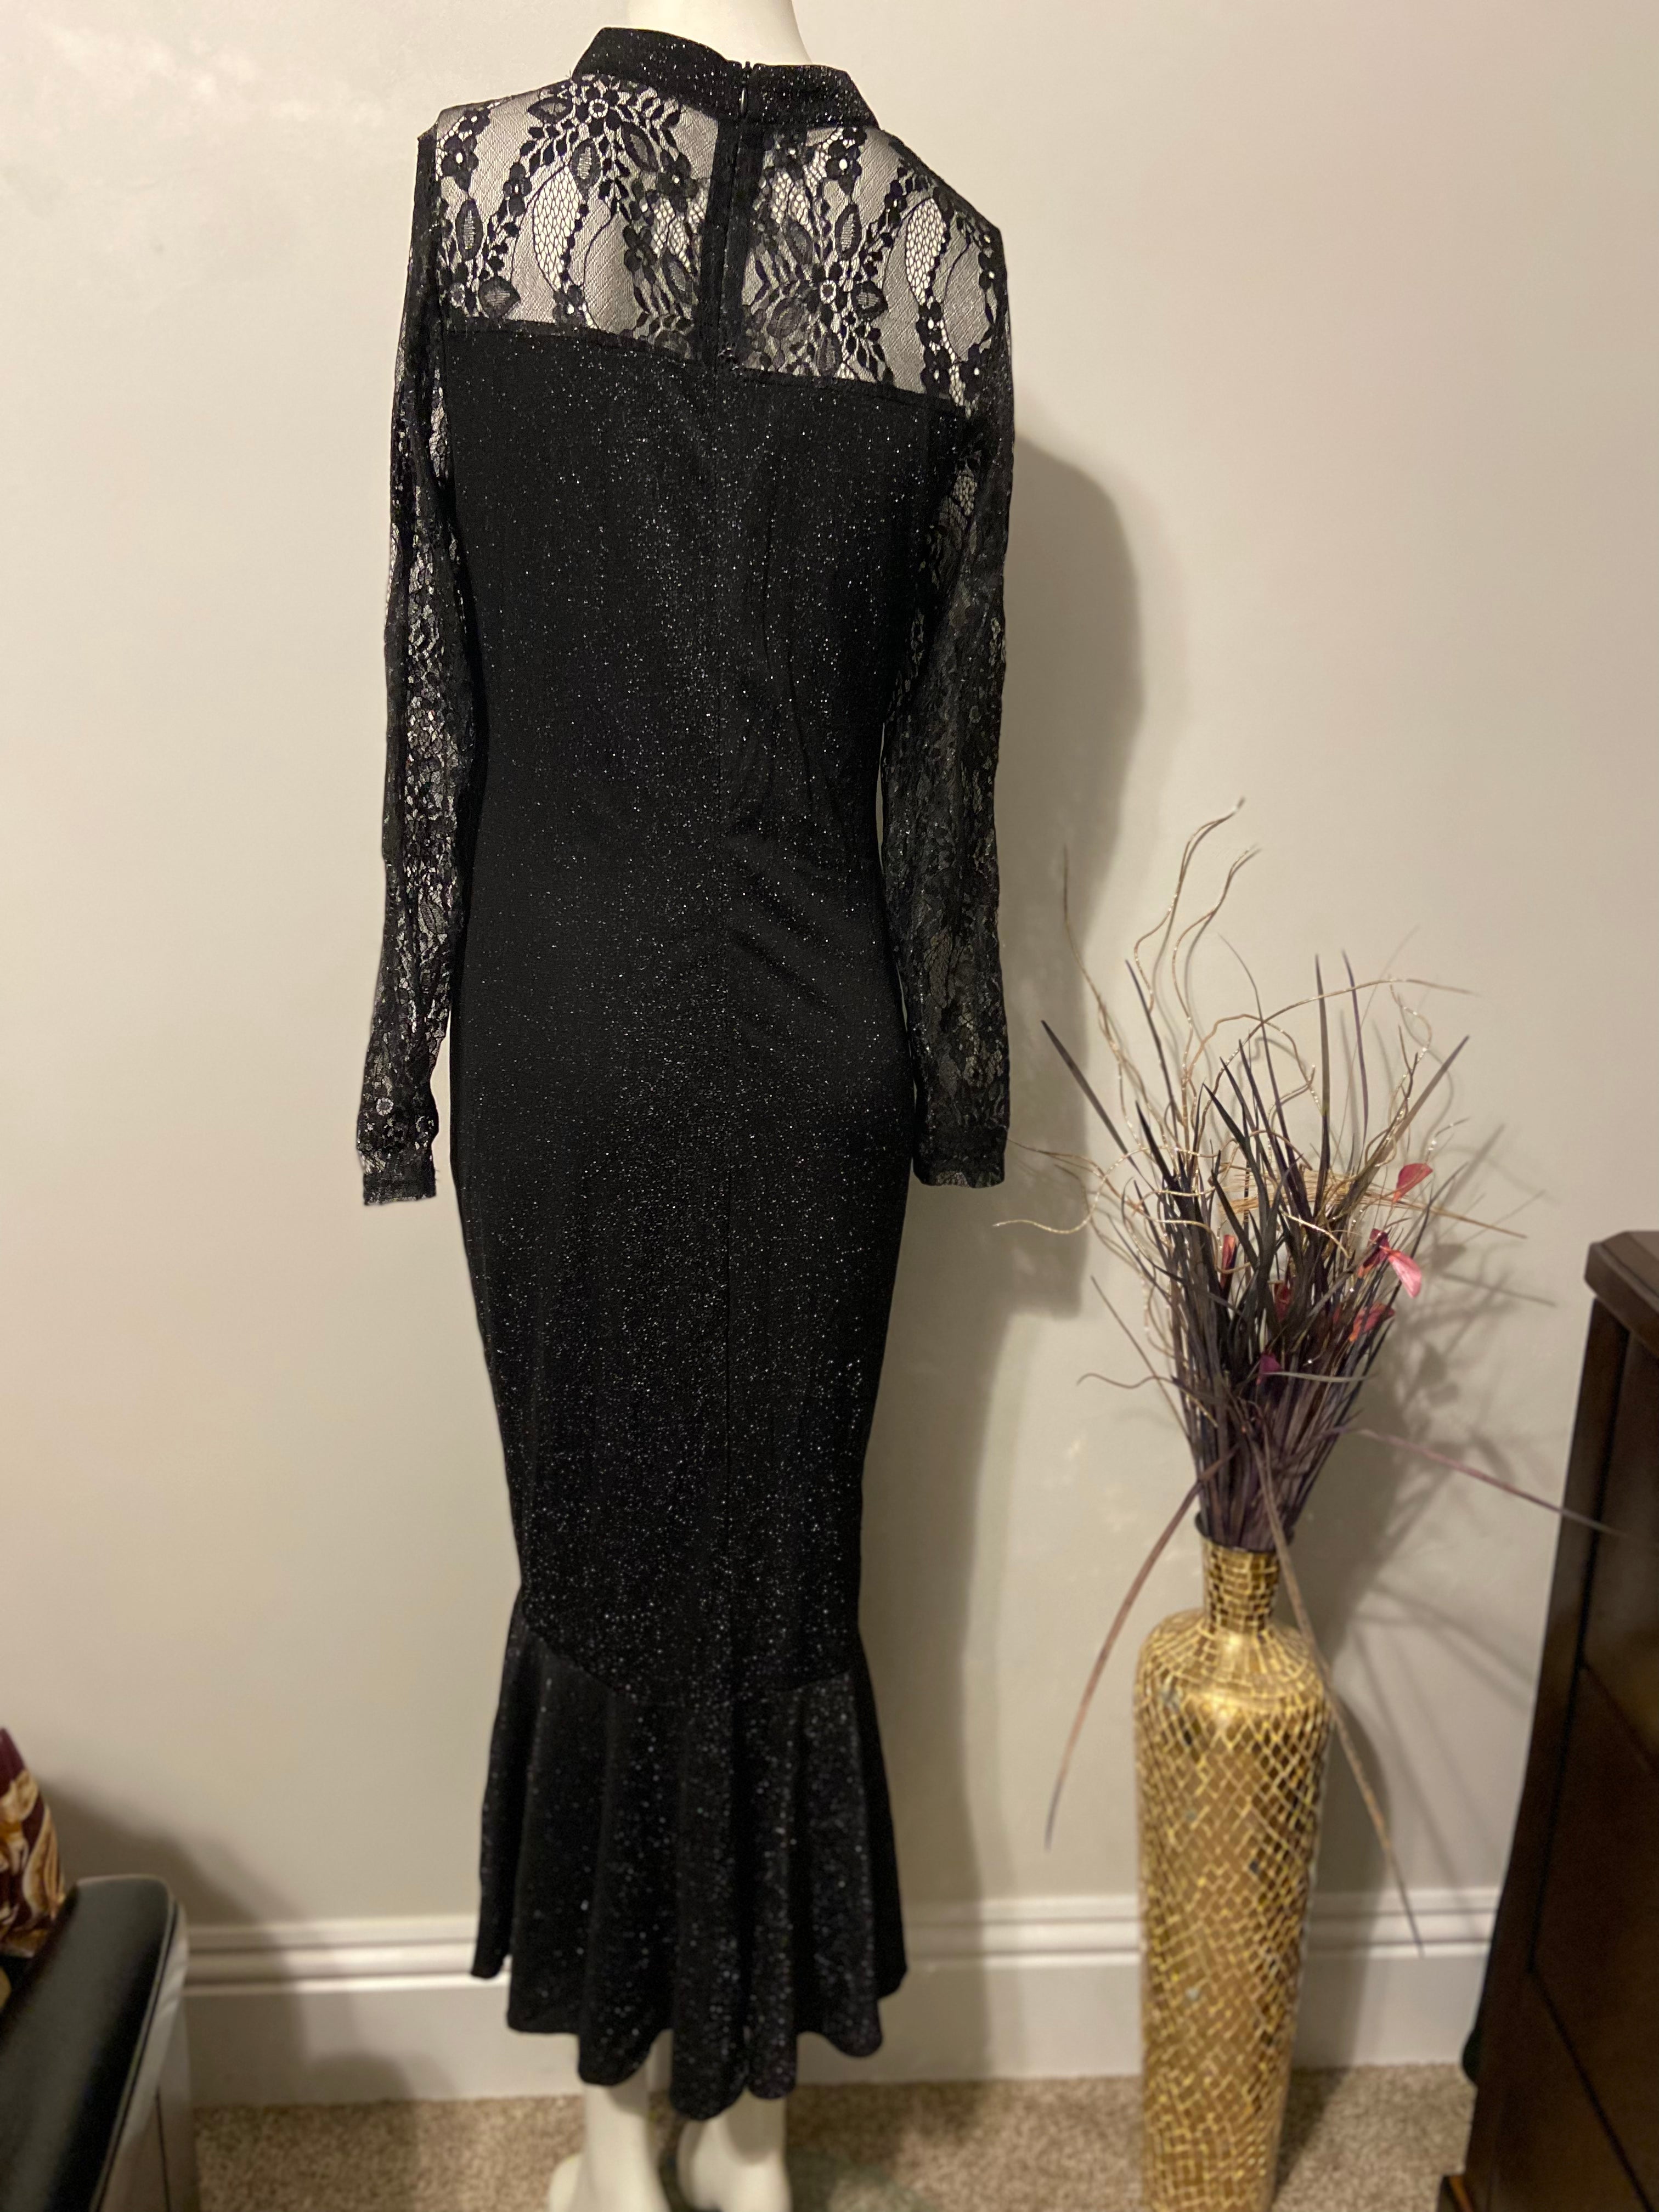 Black formal dress